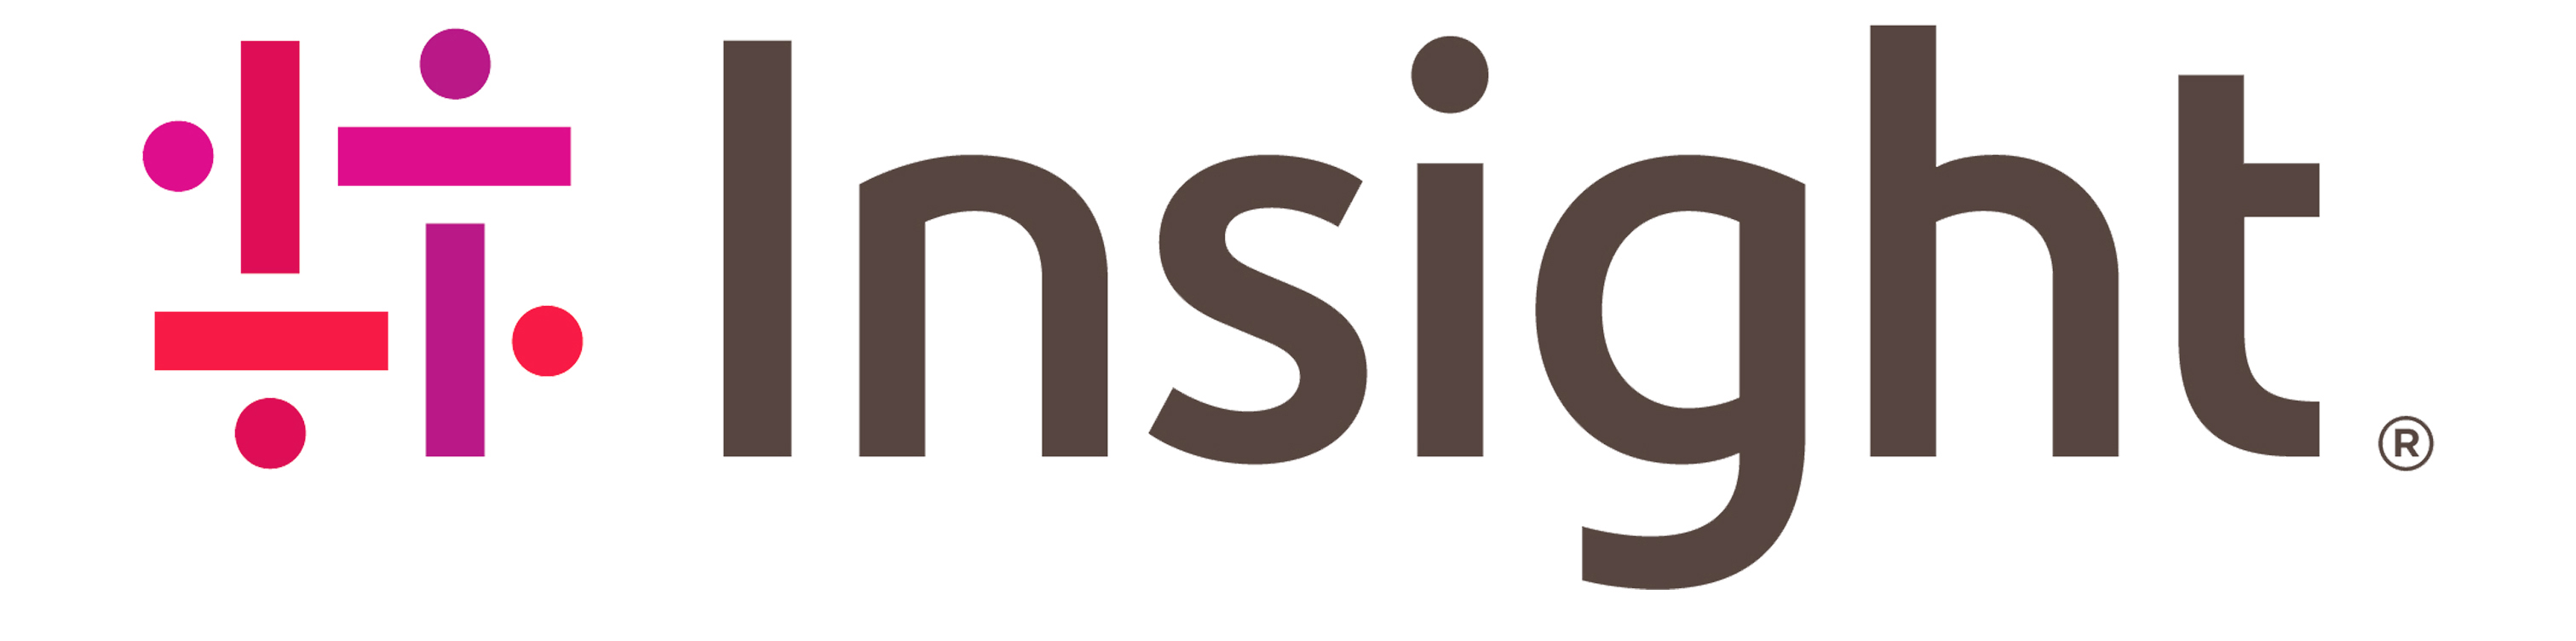 Insight sponsor logo